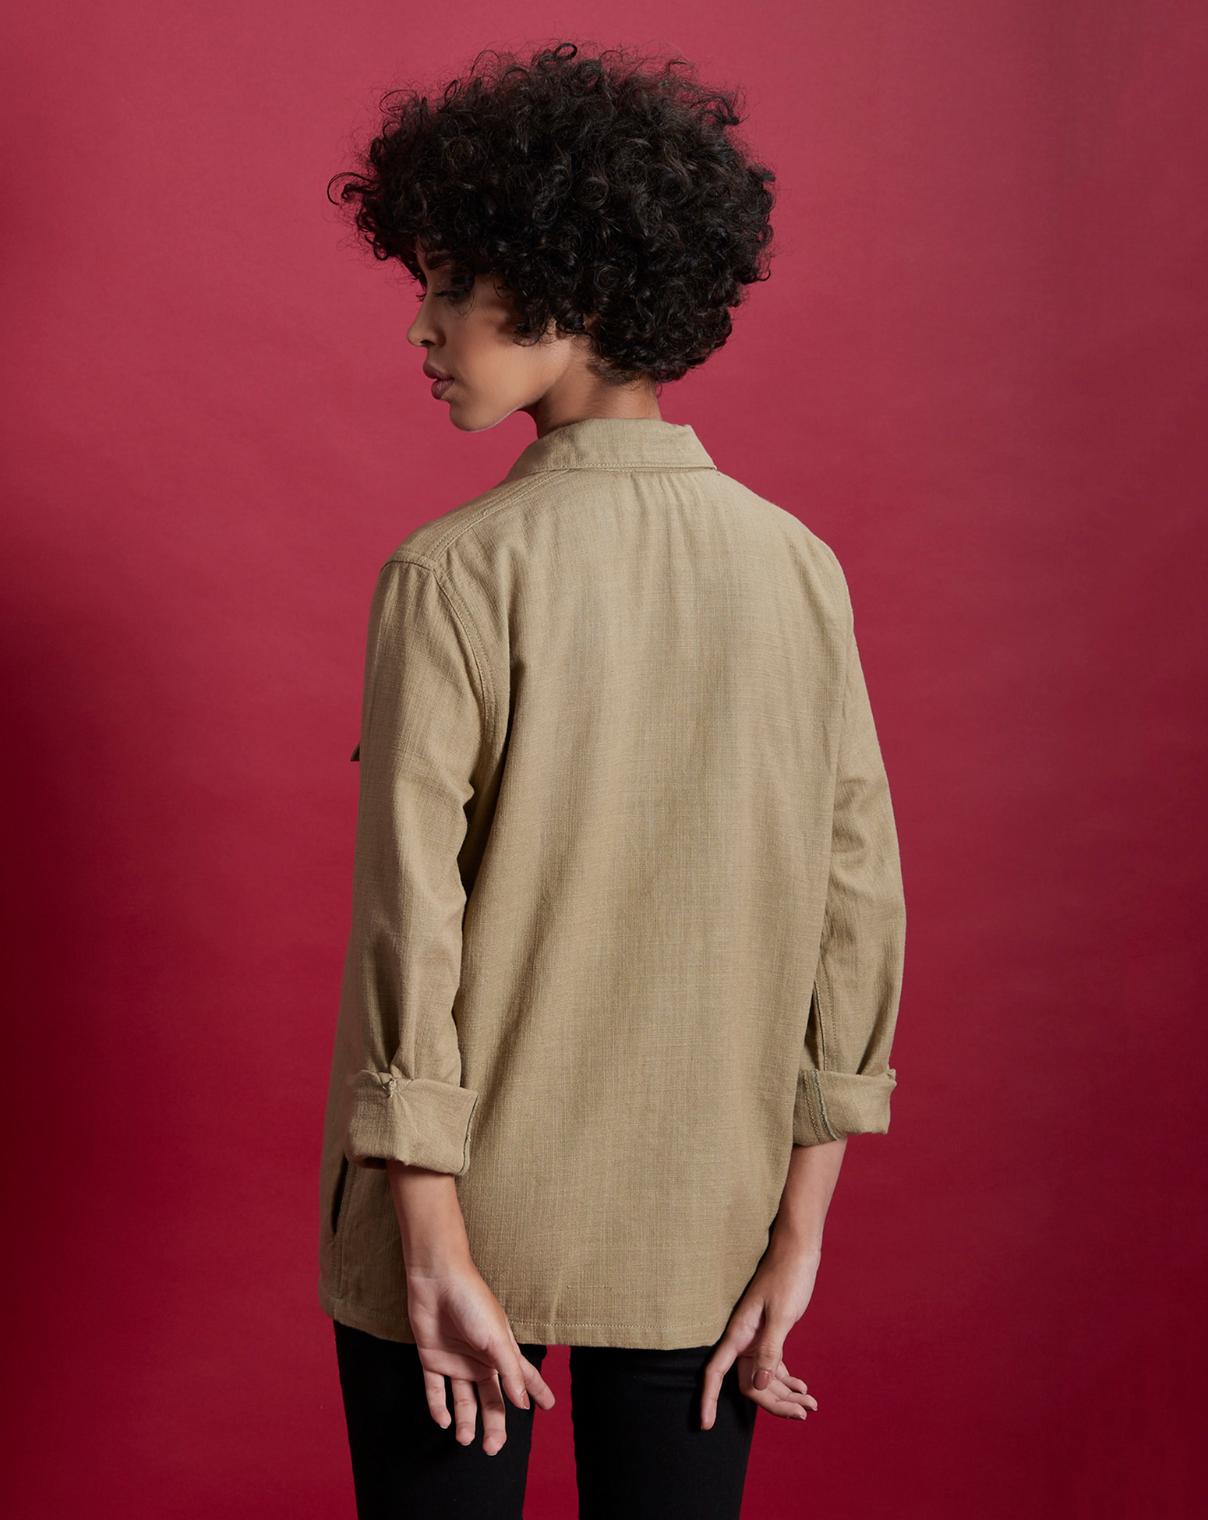 Khaki Cotton Jaket with Pocket Details on front